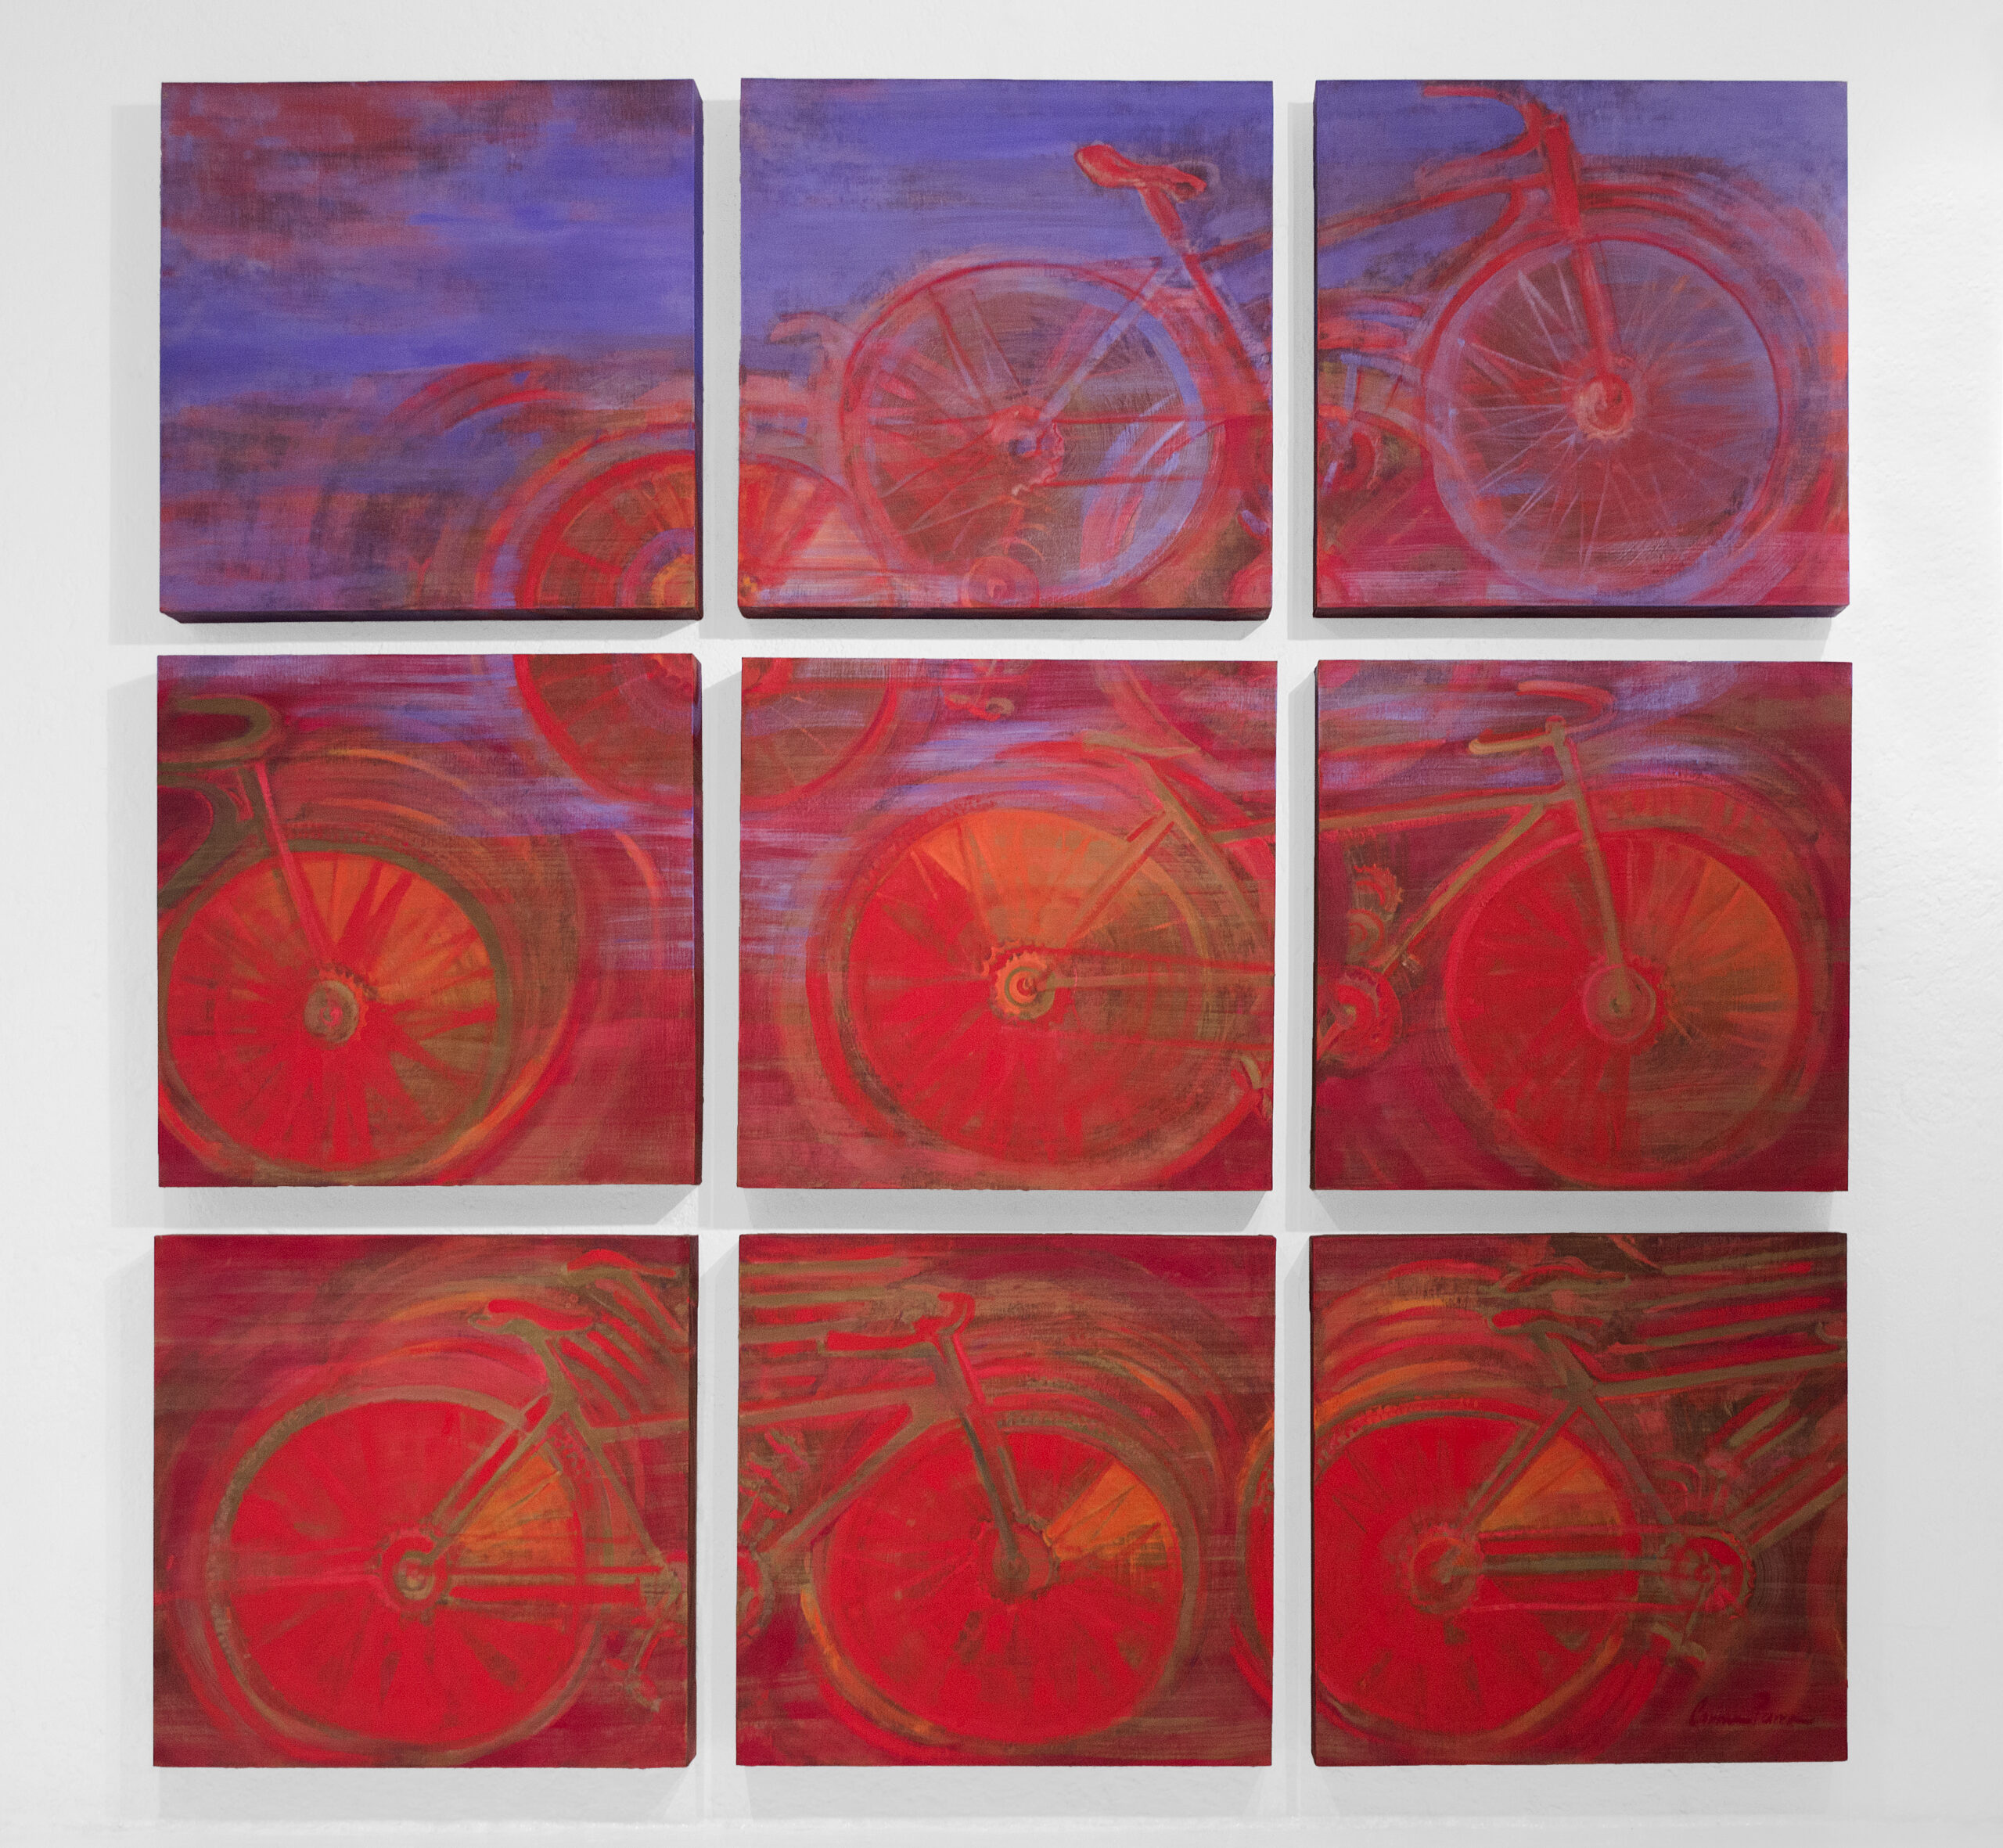 Bicicletas, viaje infinito un mural de Carmen Parra.